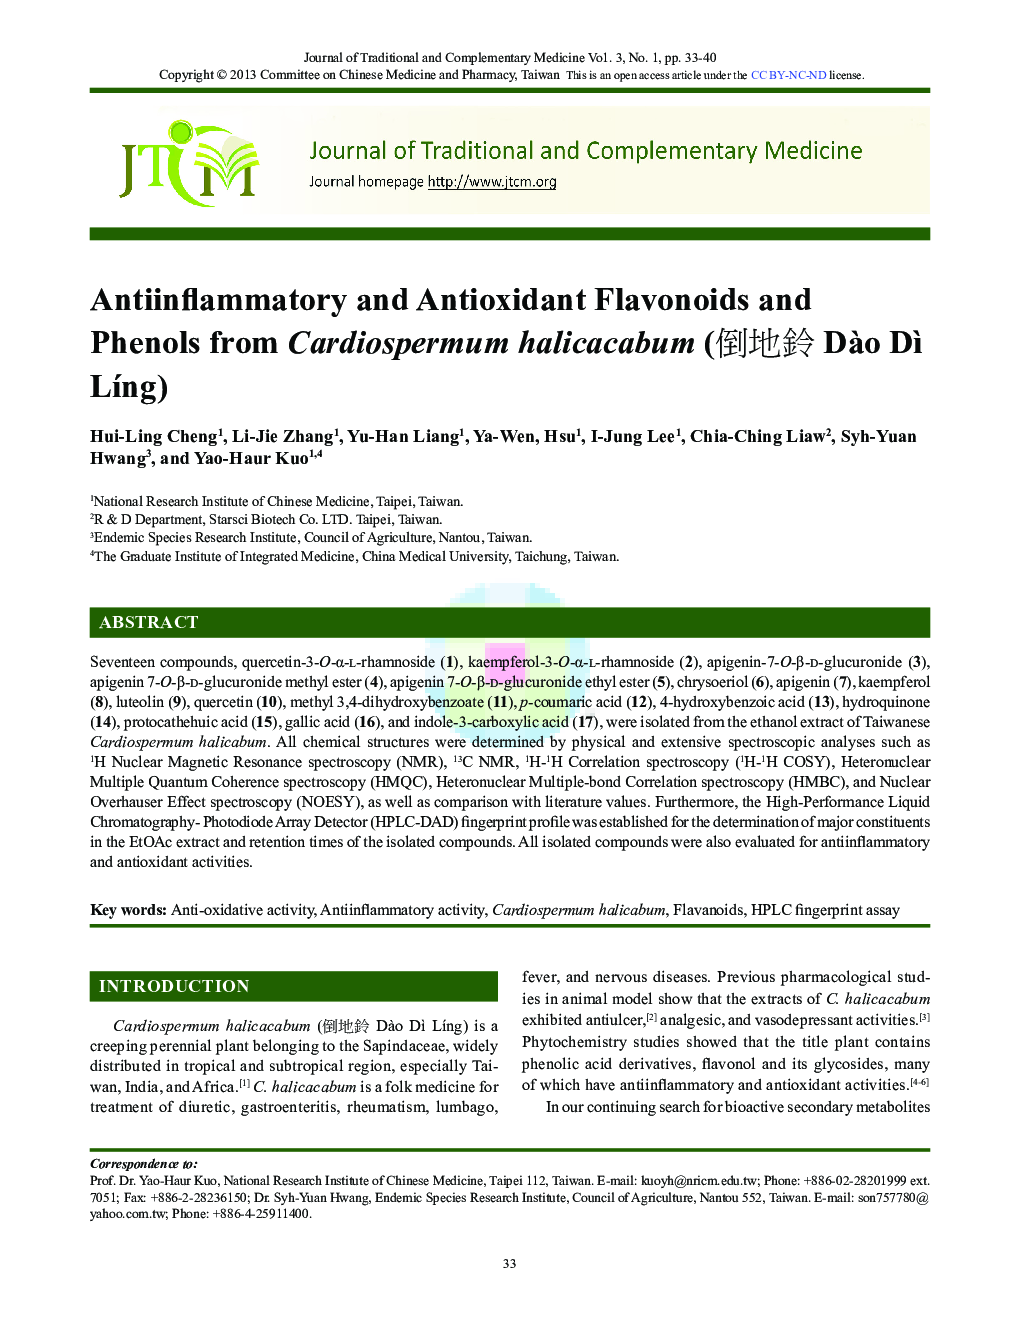 Antiinflammatory and Antioxidant Flavonoids and Phenols from Cardiospermum halicacabum (倒地鈴 Dào Dì Líng)